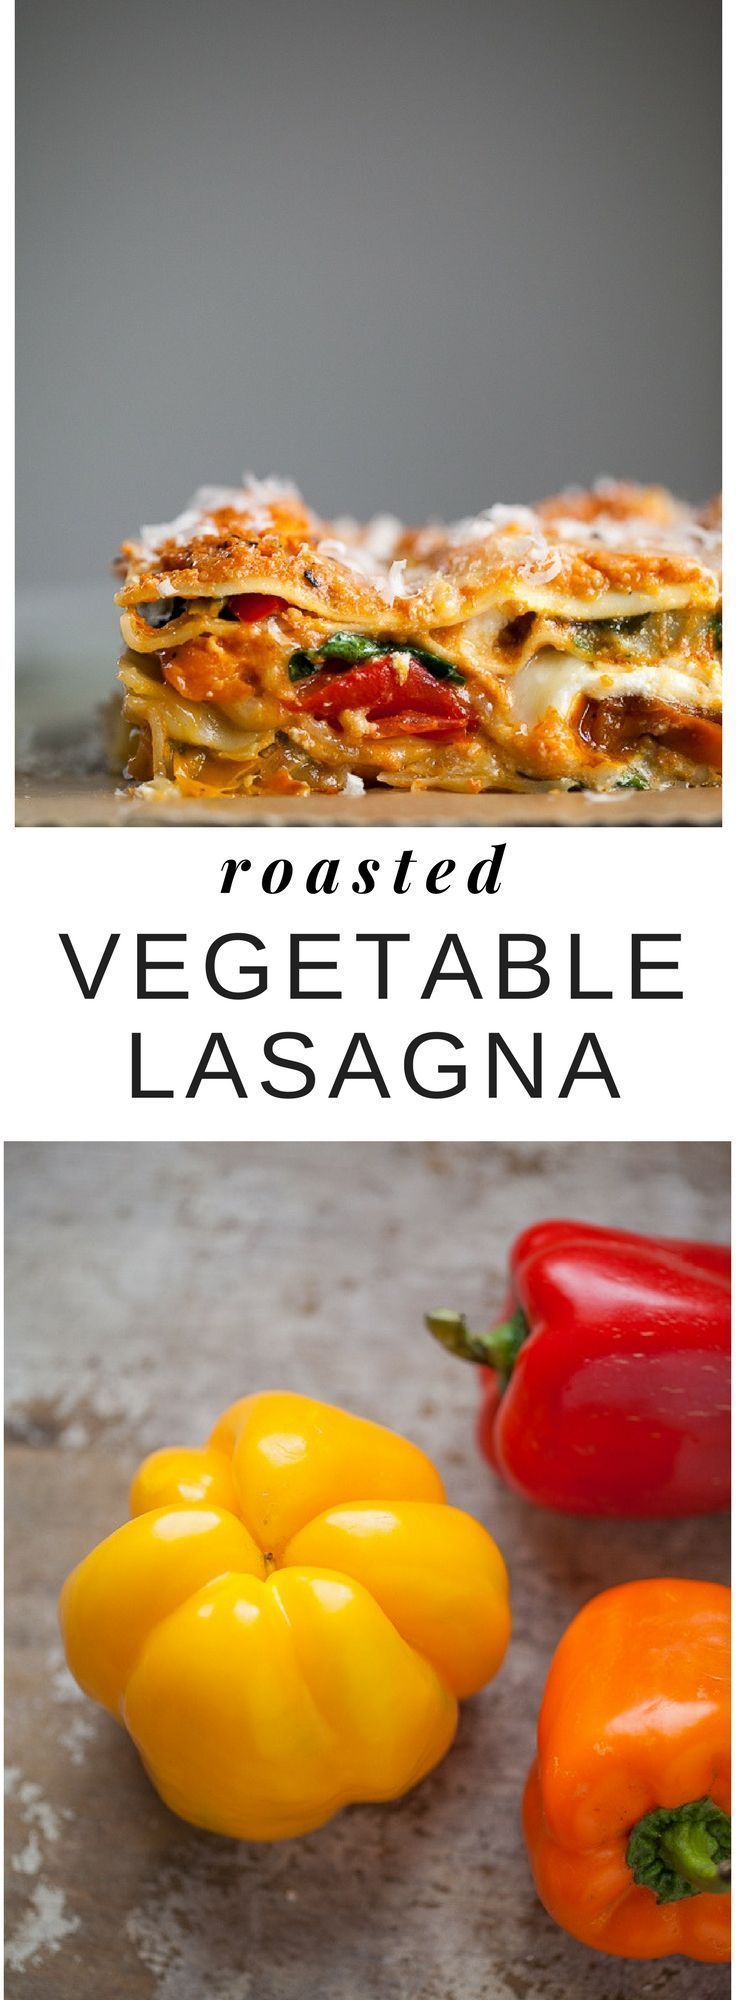 19 meatless lasagna recipes
 ideas